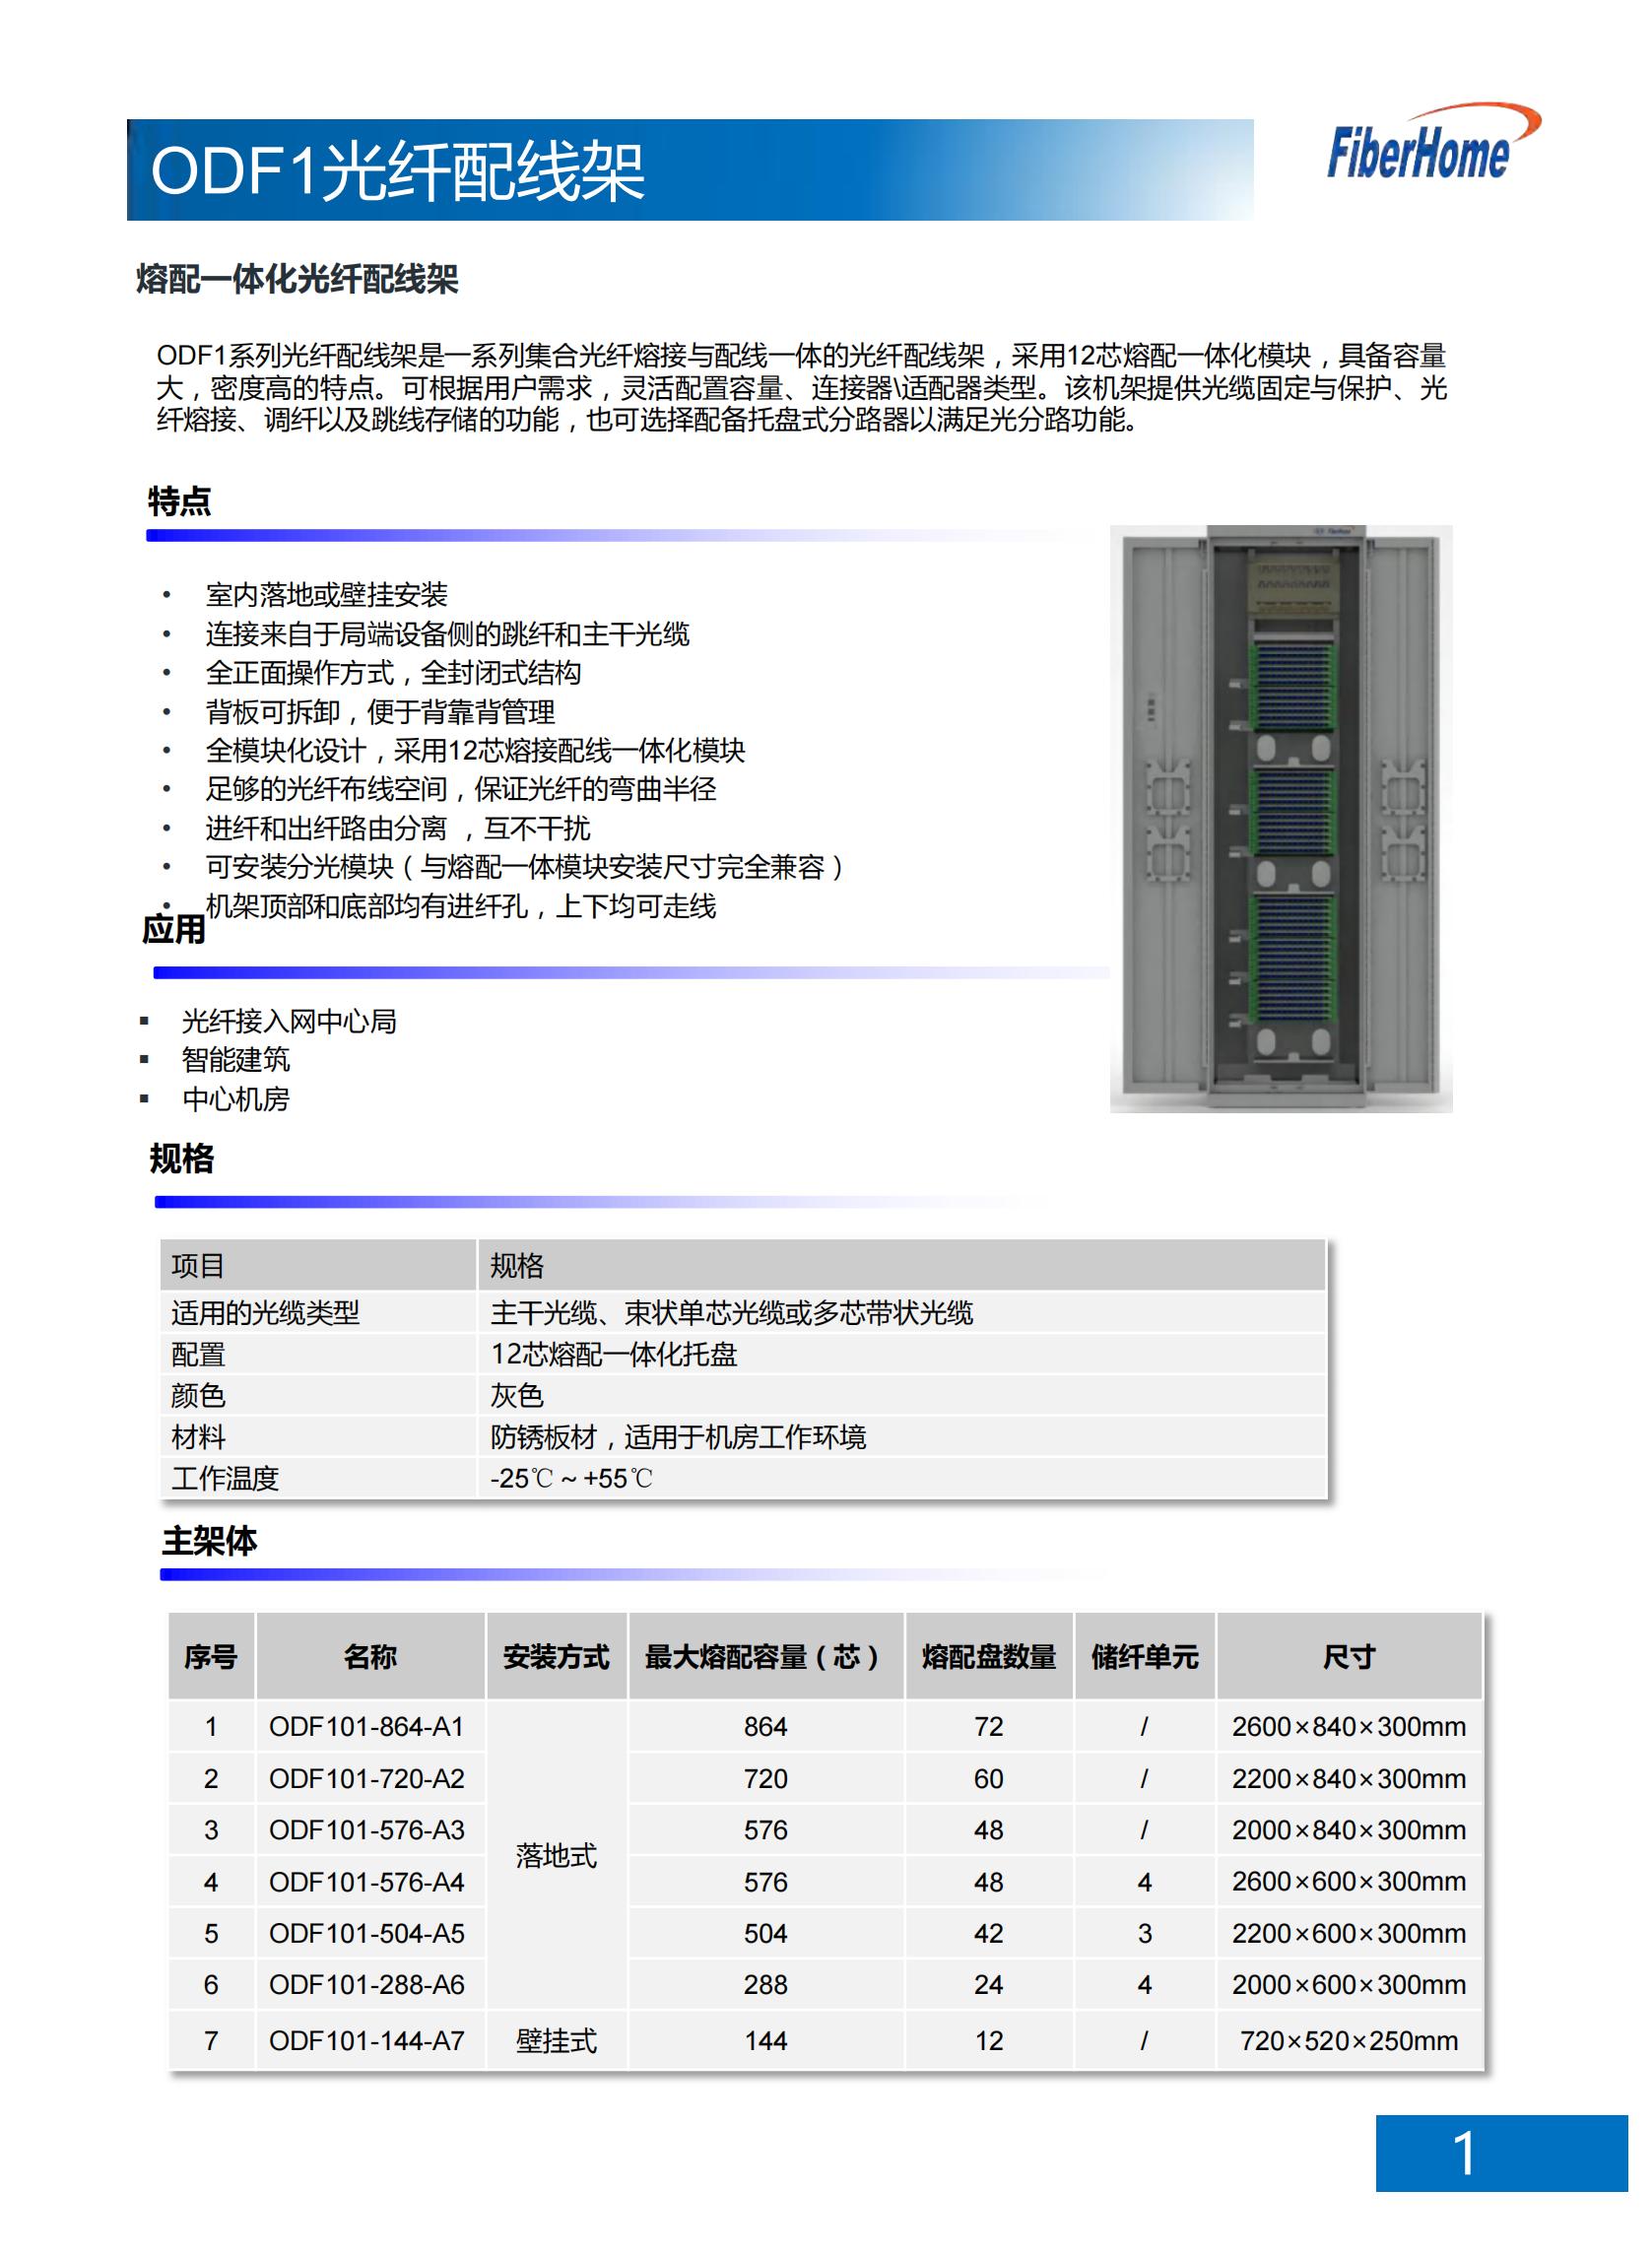 ODF101-720-A2 ODF光纤配线架 （720芯落地式 无子框型 不带熔纤盘）